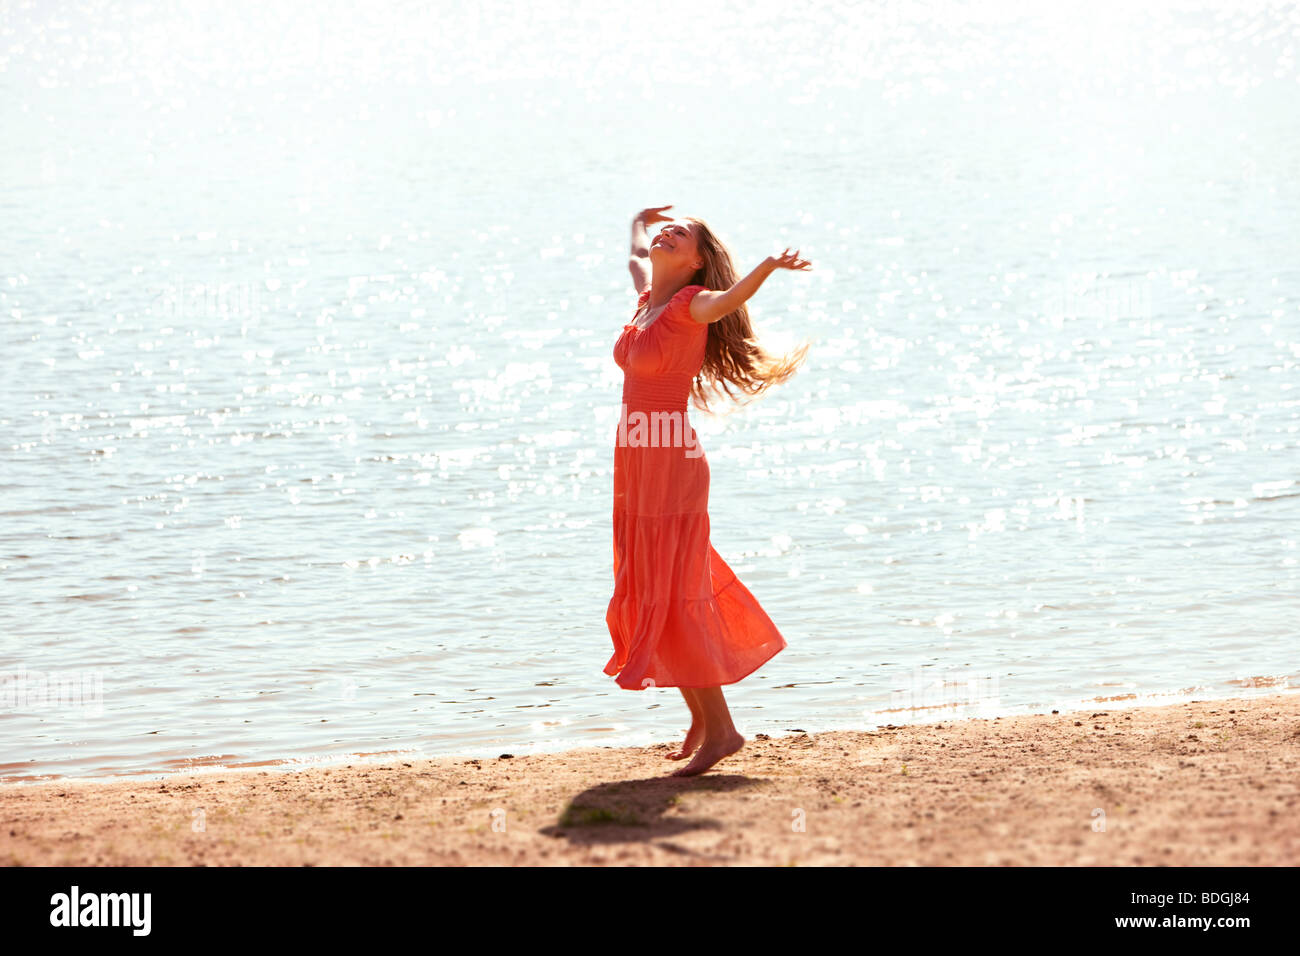 Frau tanzt am Strand mit Hingabe, Arme ausgestreckt. Stockfoto